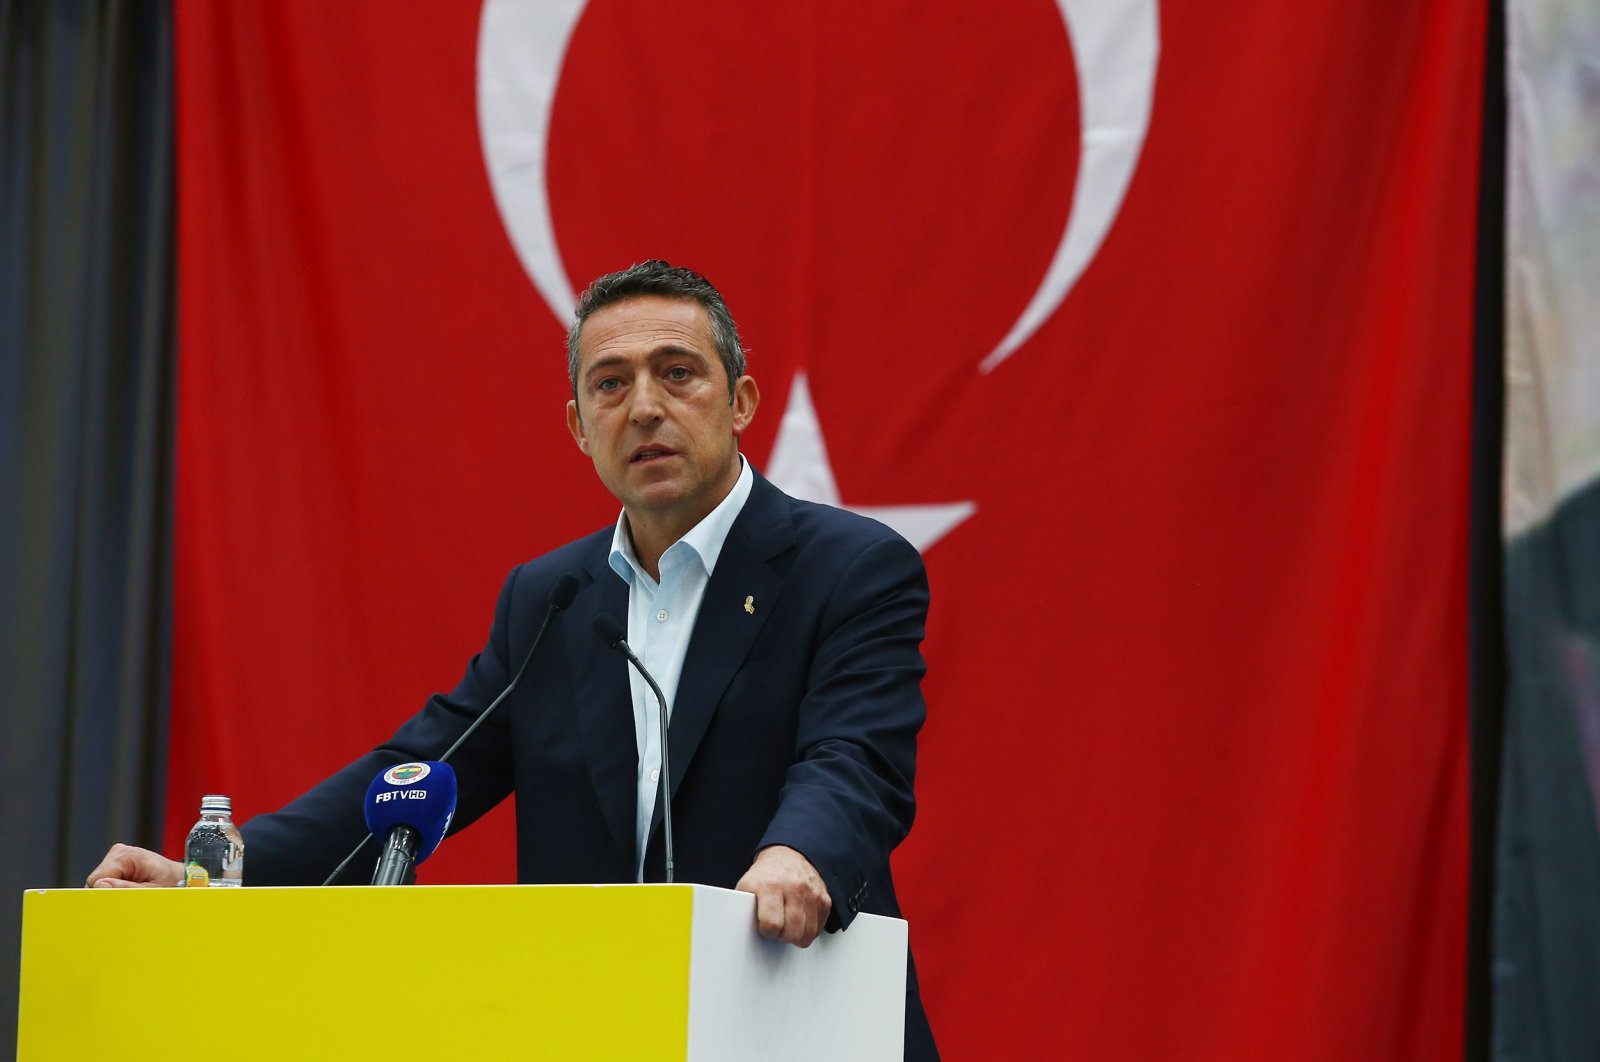 Fenebahçe Chairman Ali Koç speaks at an event in Istanbul, Turkey, June 6, 2021.